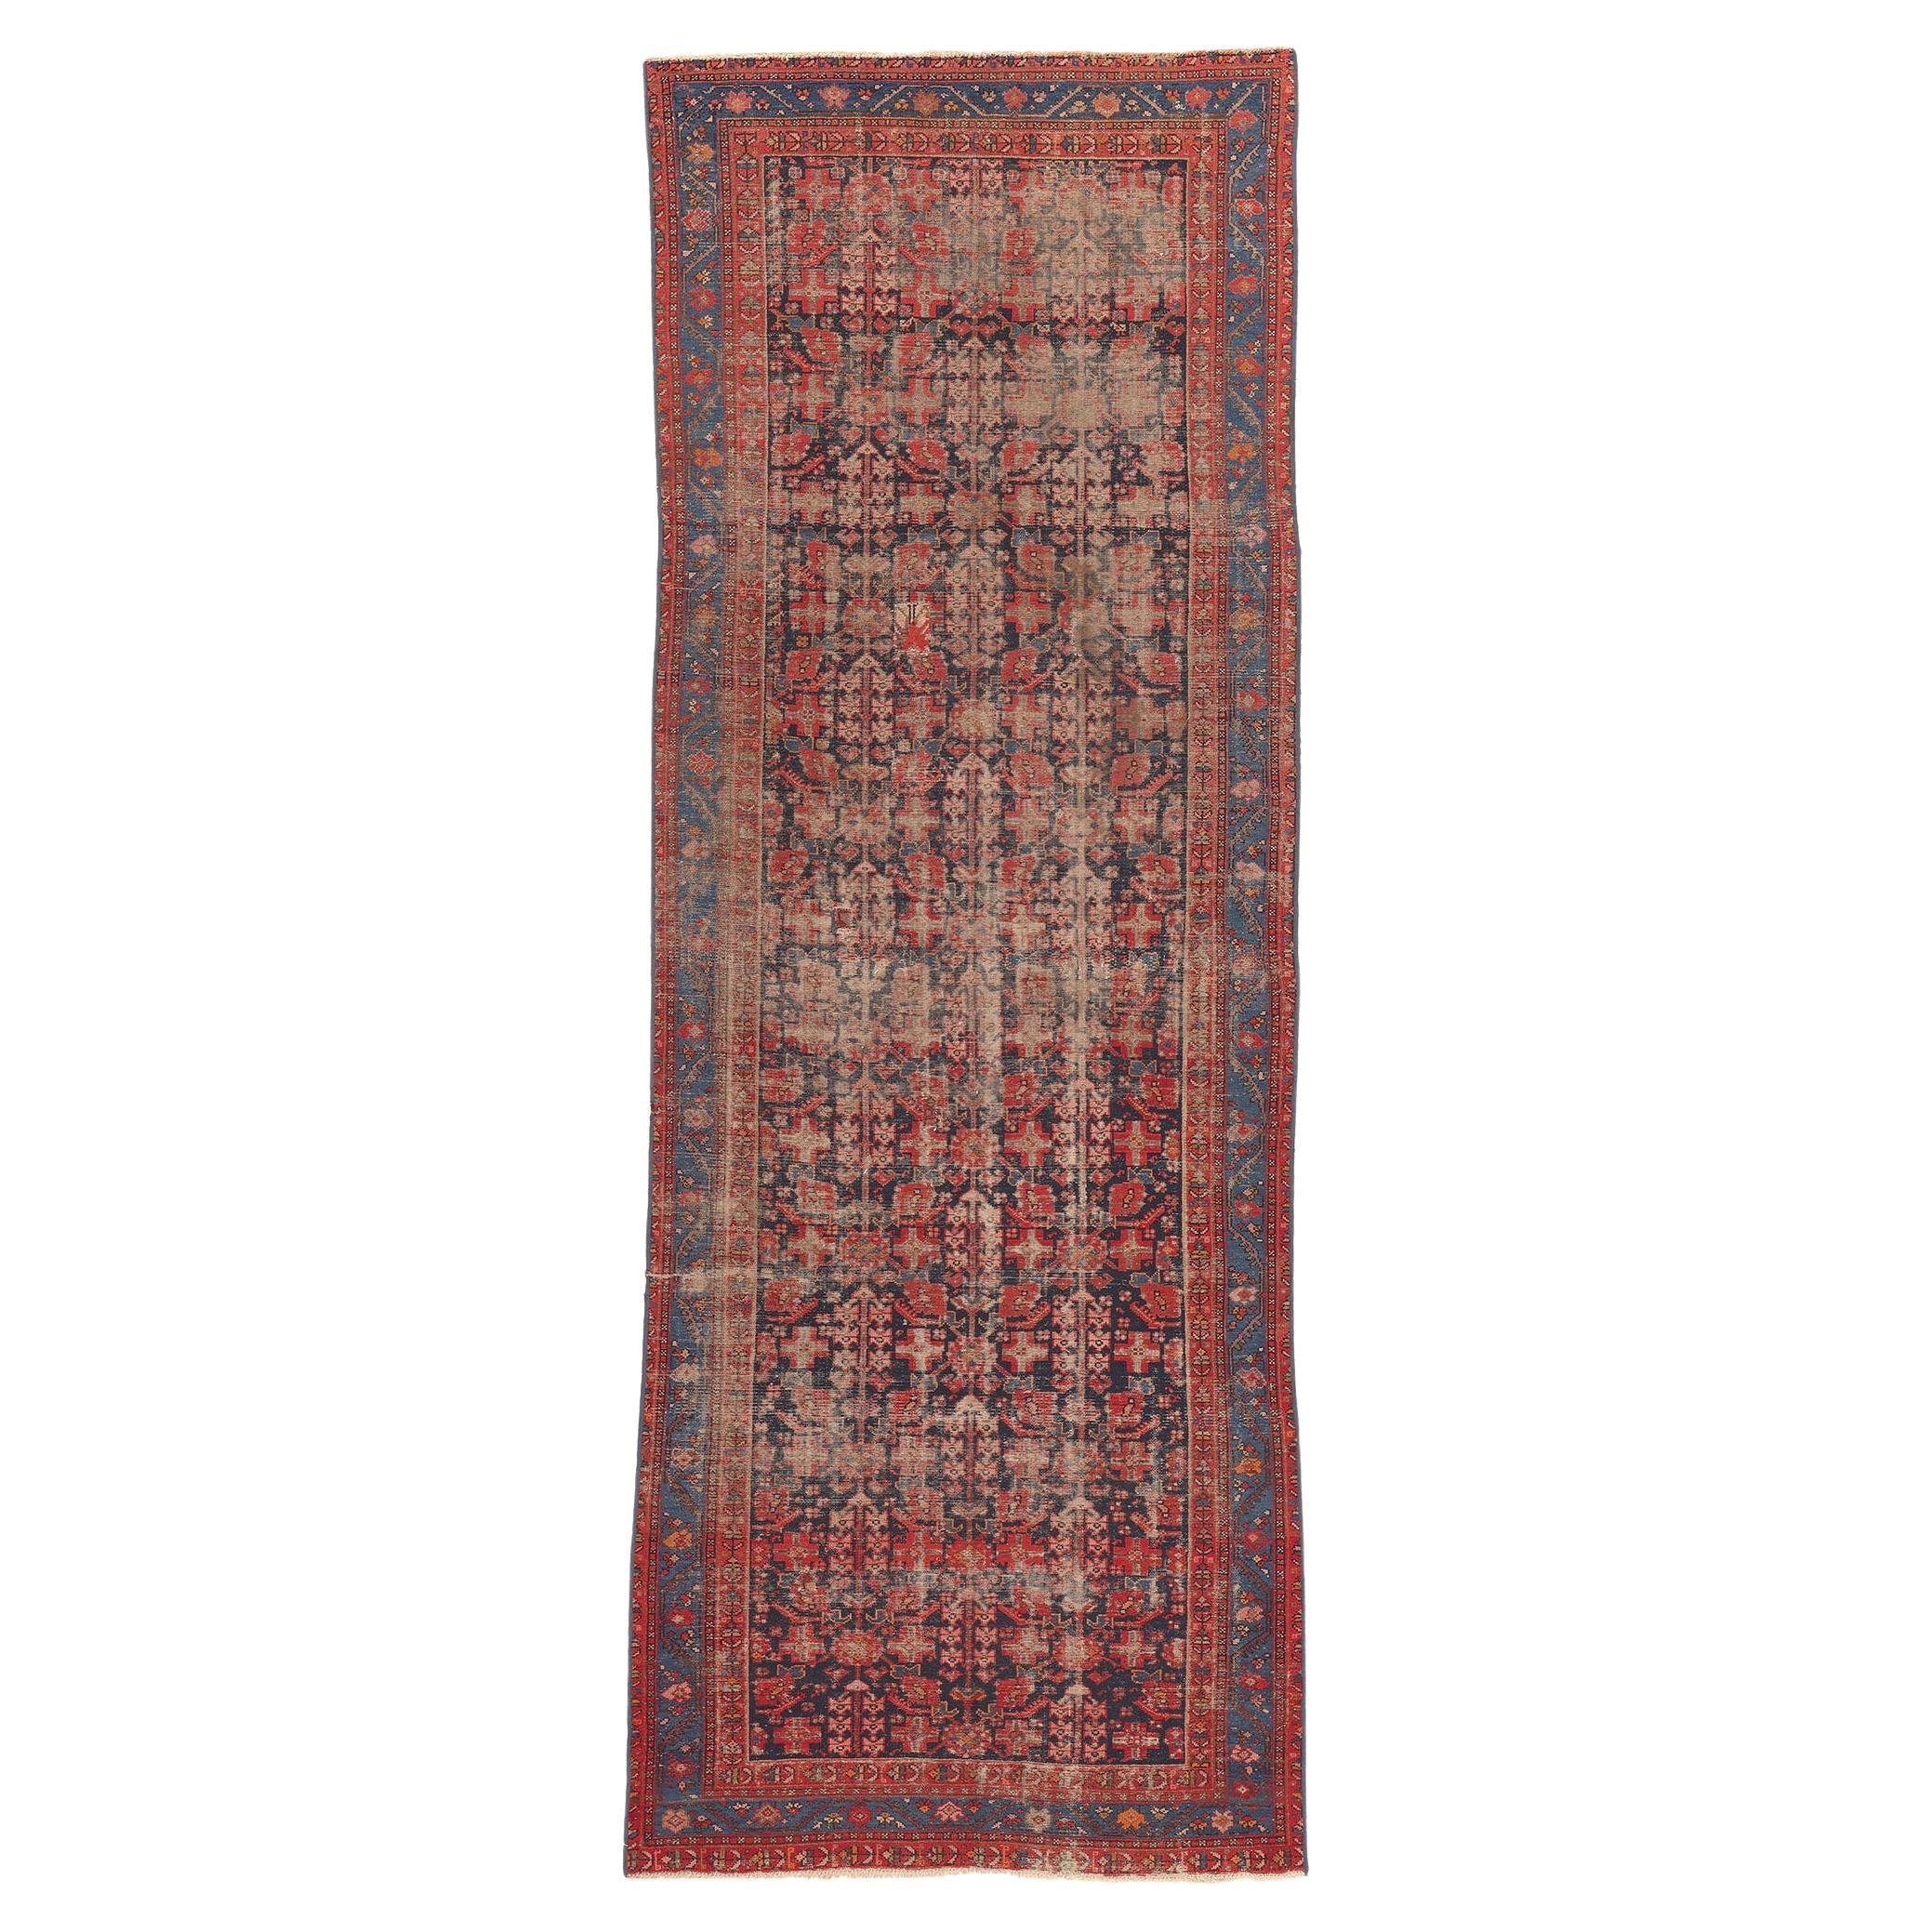 Tapis persan Malayer ancien vieilli, large tapis de couloir de salon